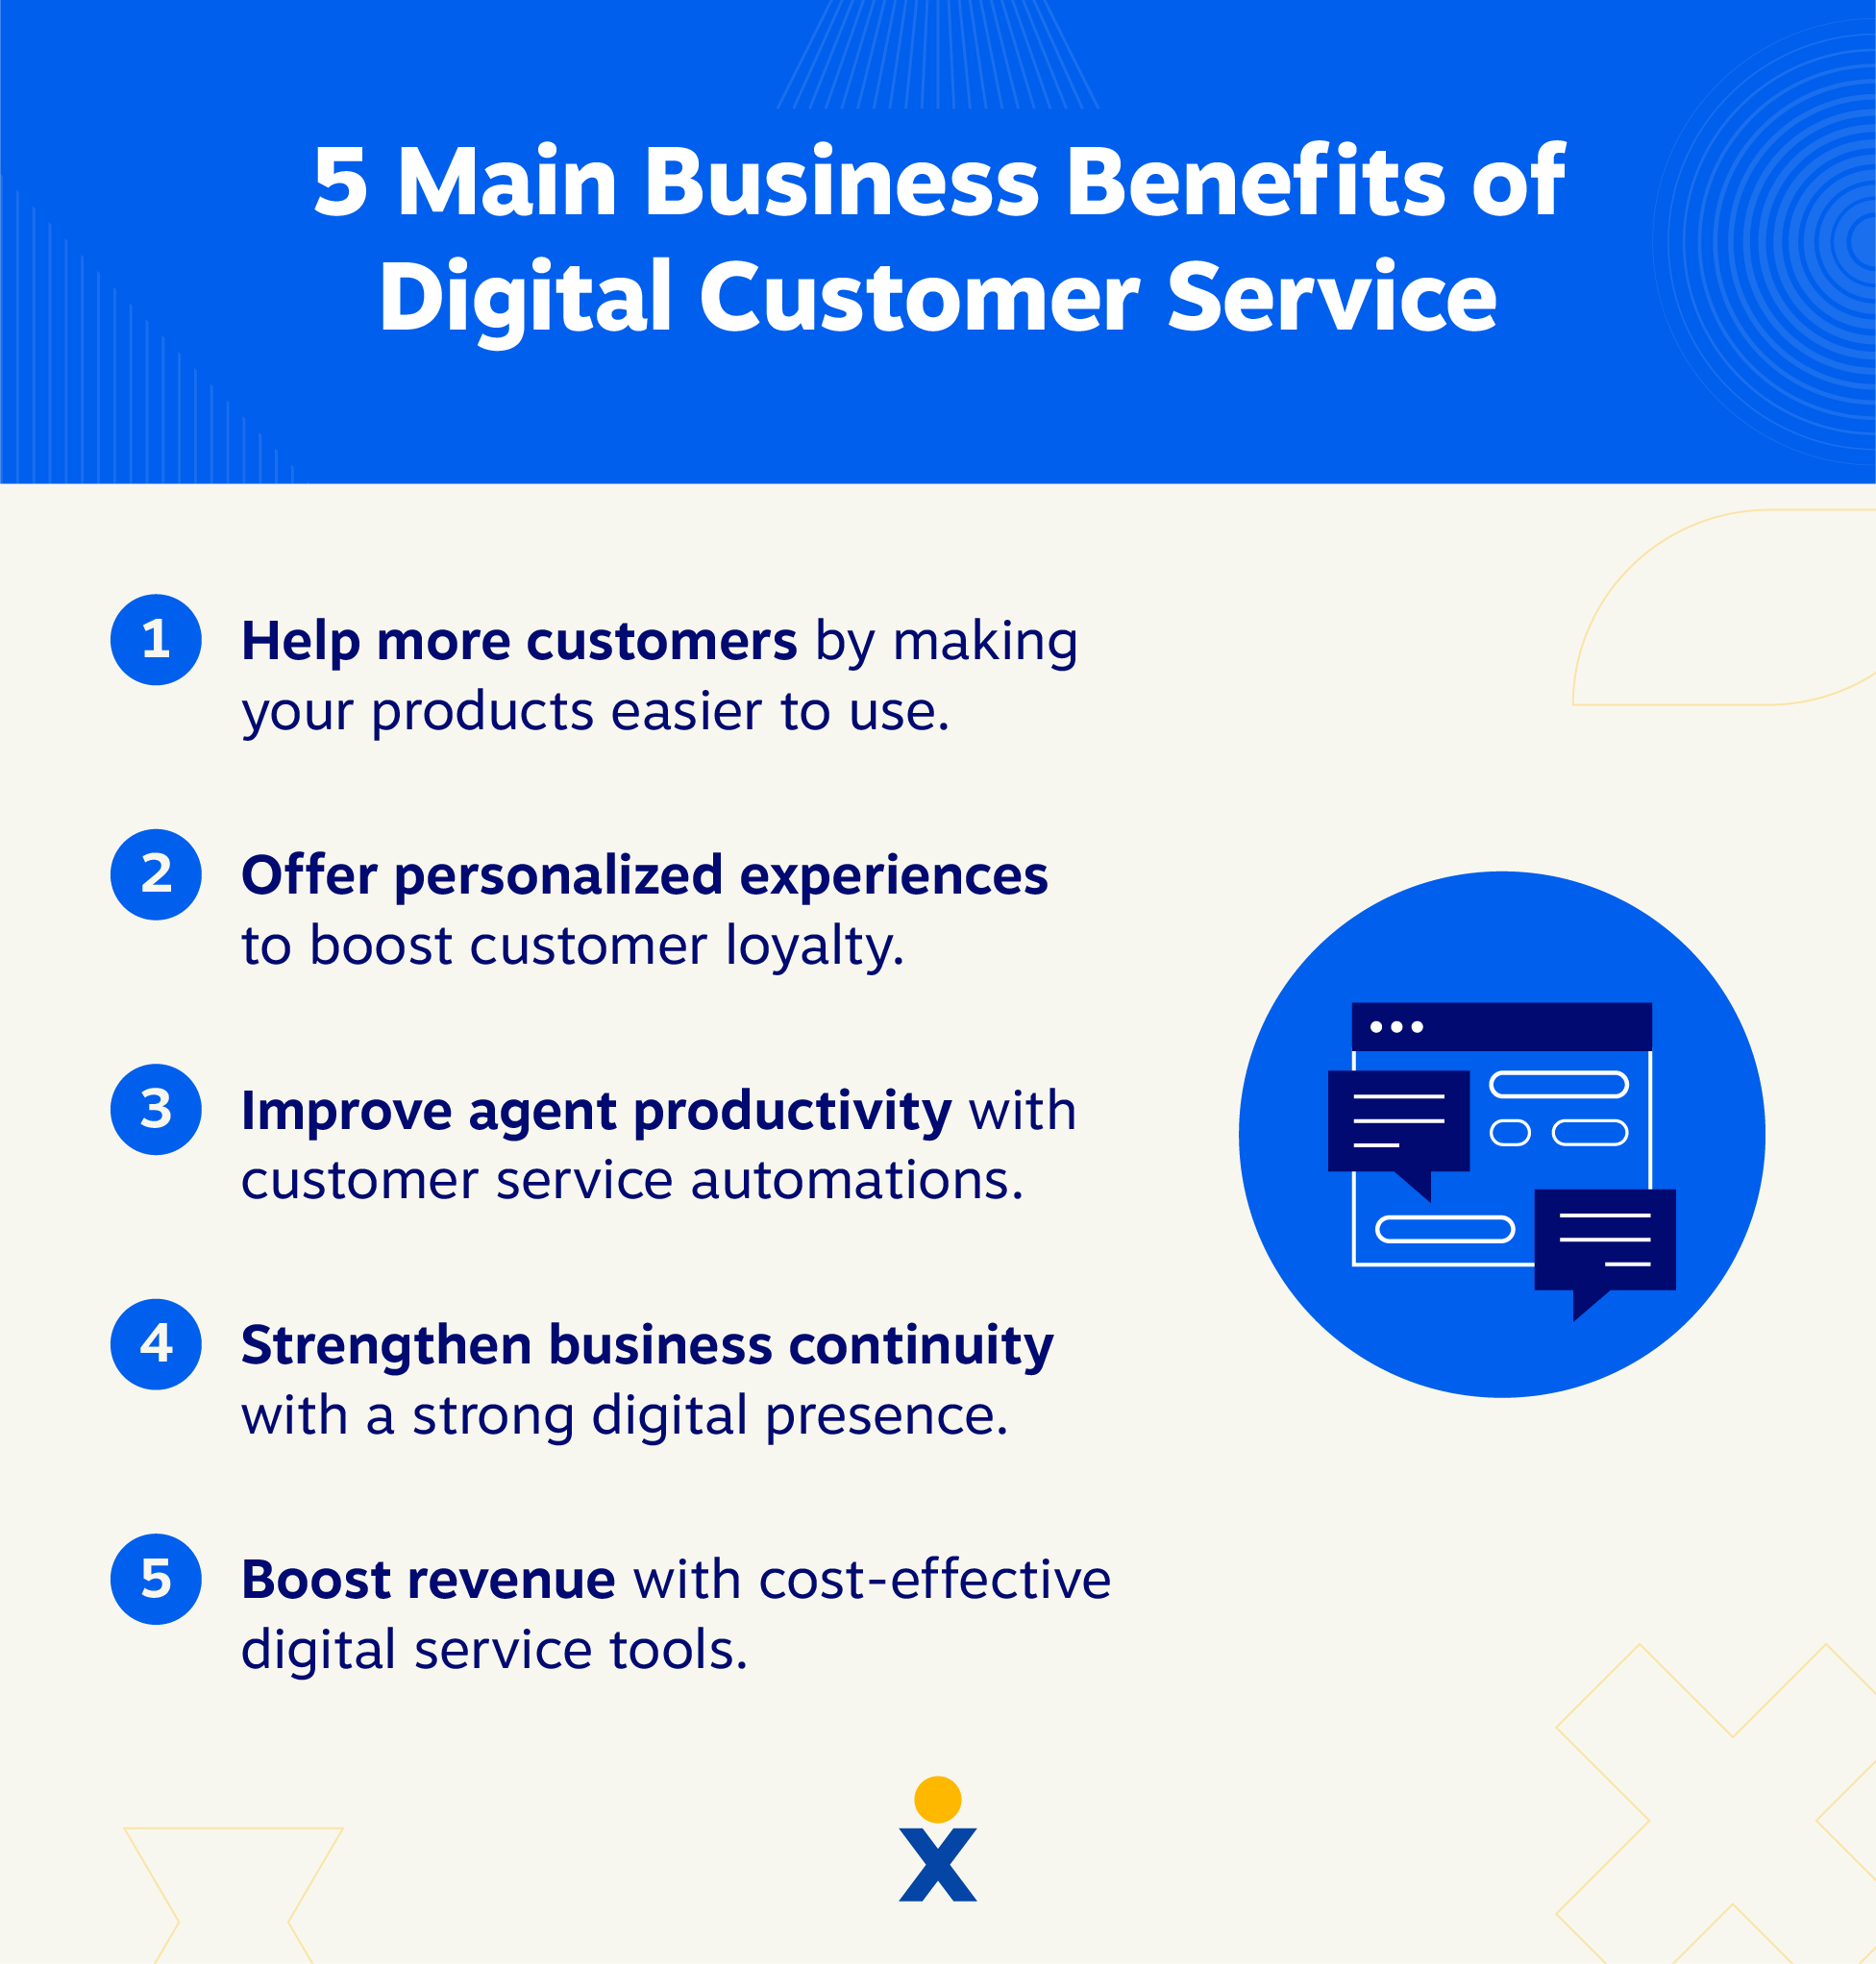 The five main business benefits of digital customer service